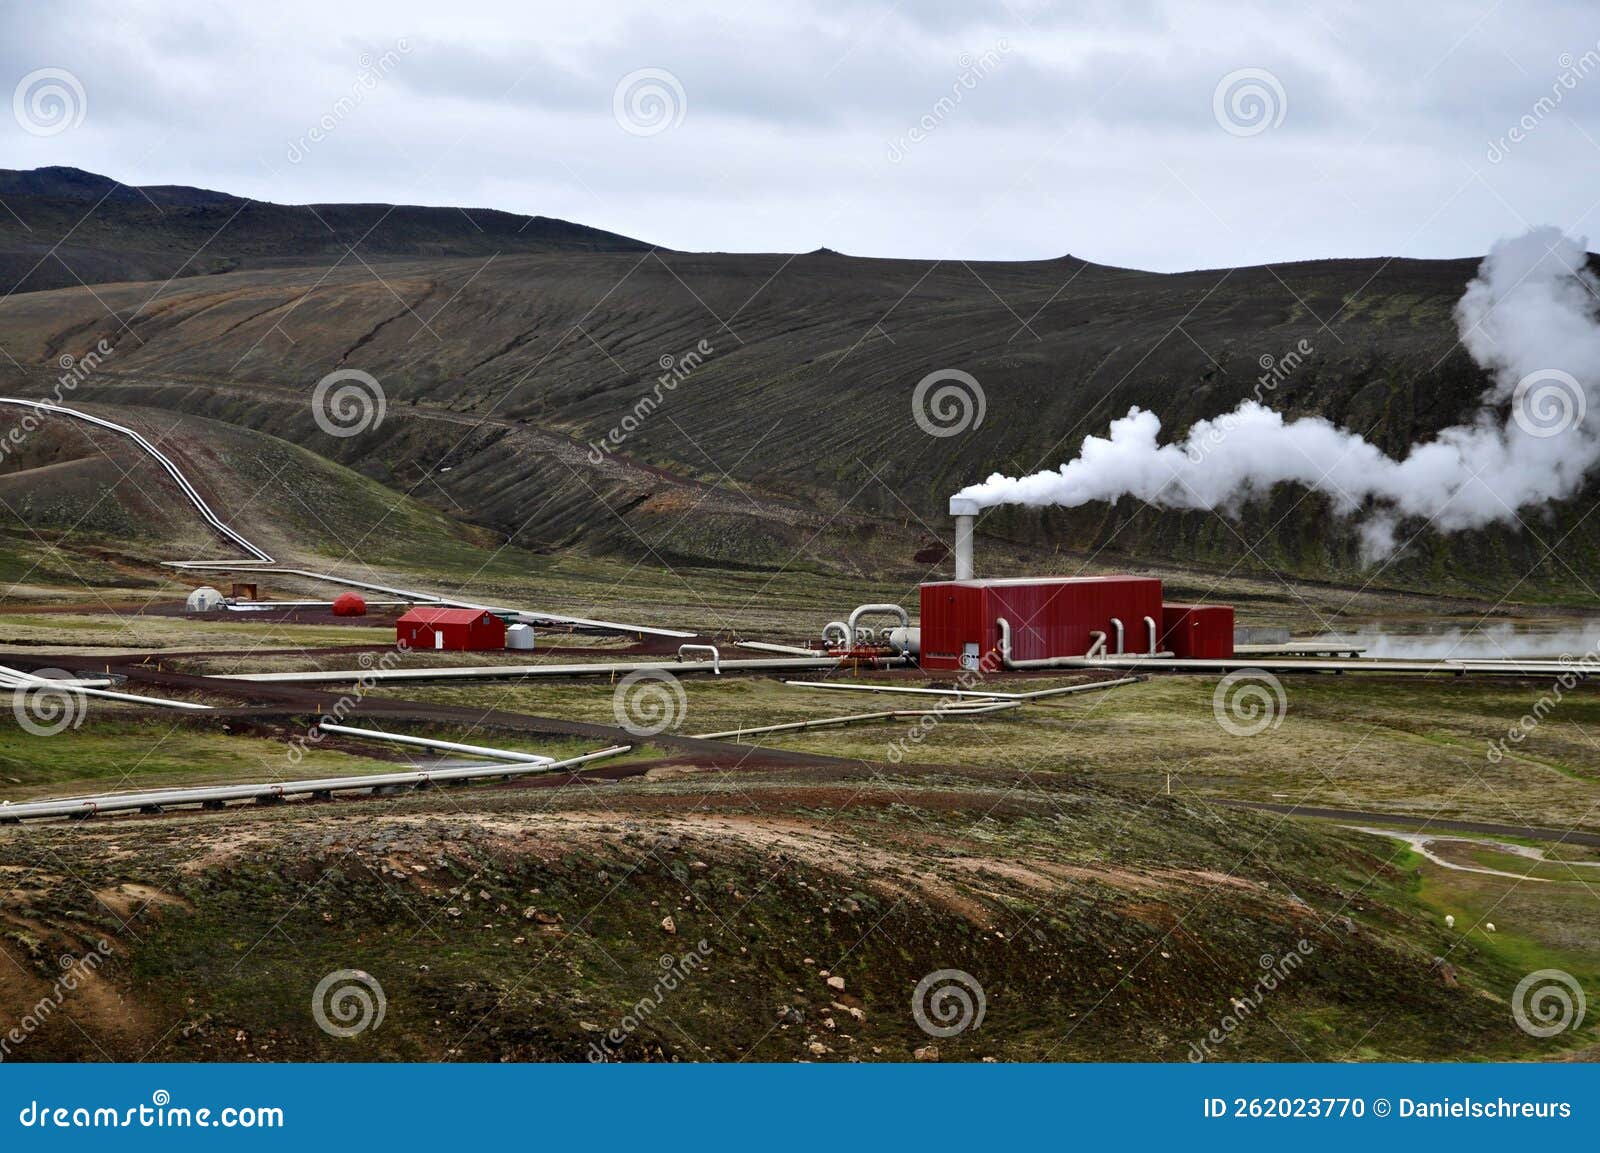 krafla geothermal power station, iceland